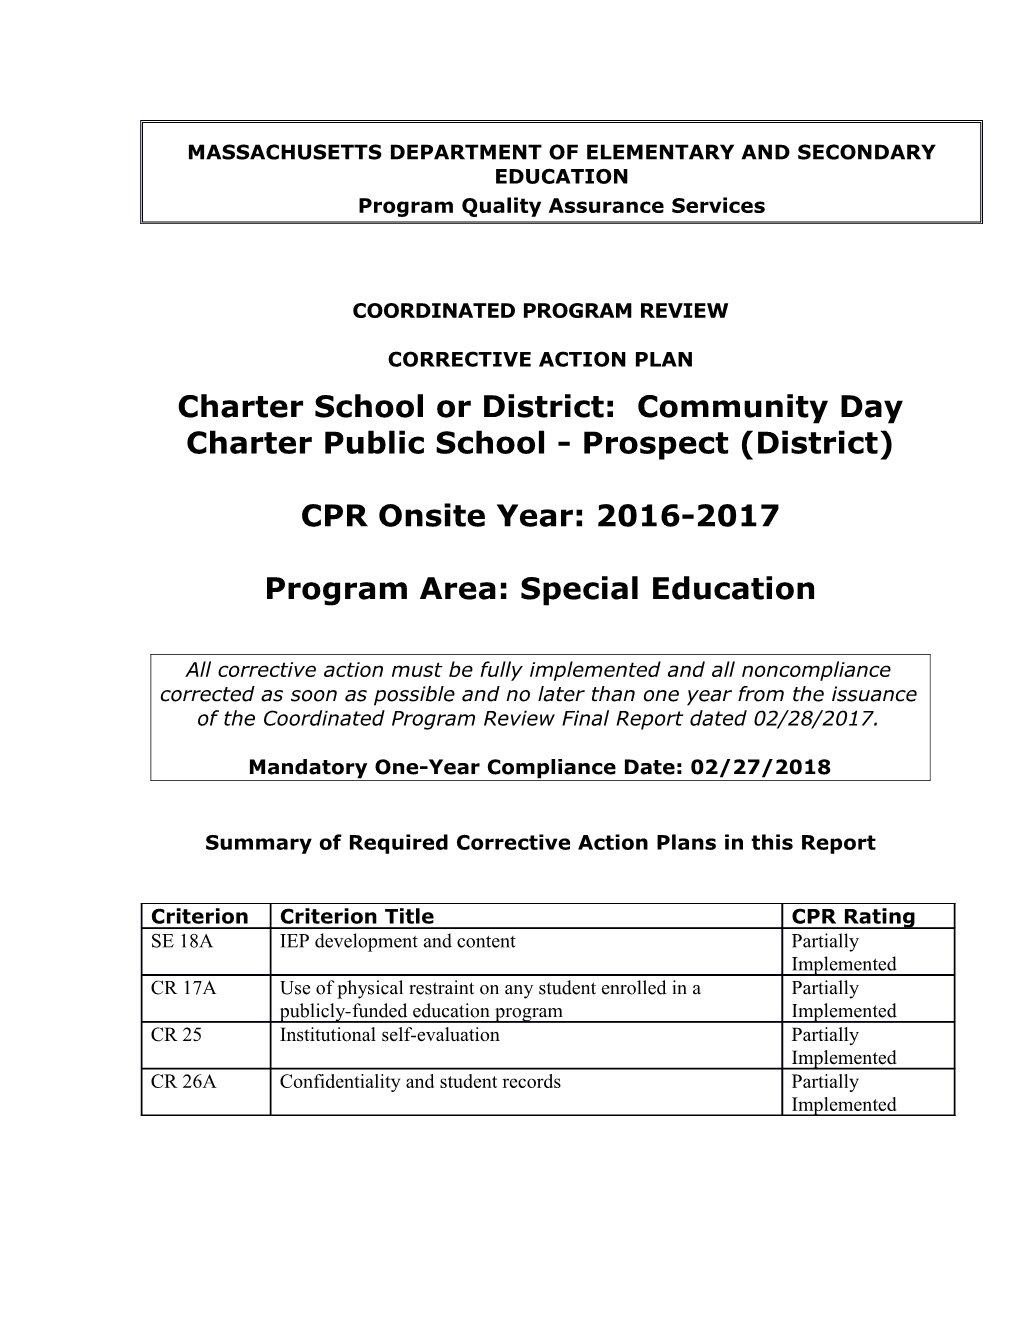 Community Day Charter School - Prospect CAP 2017